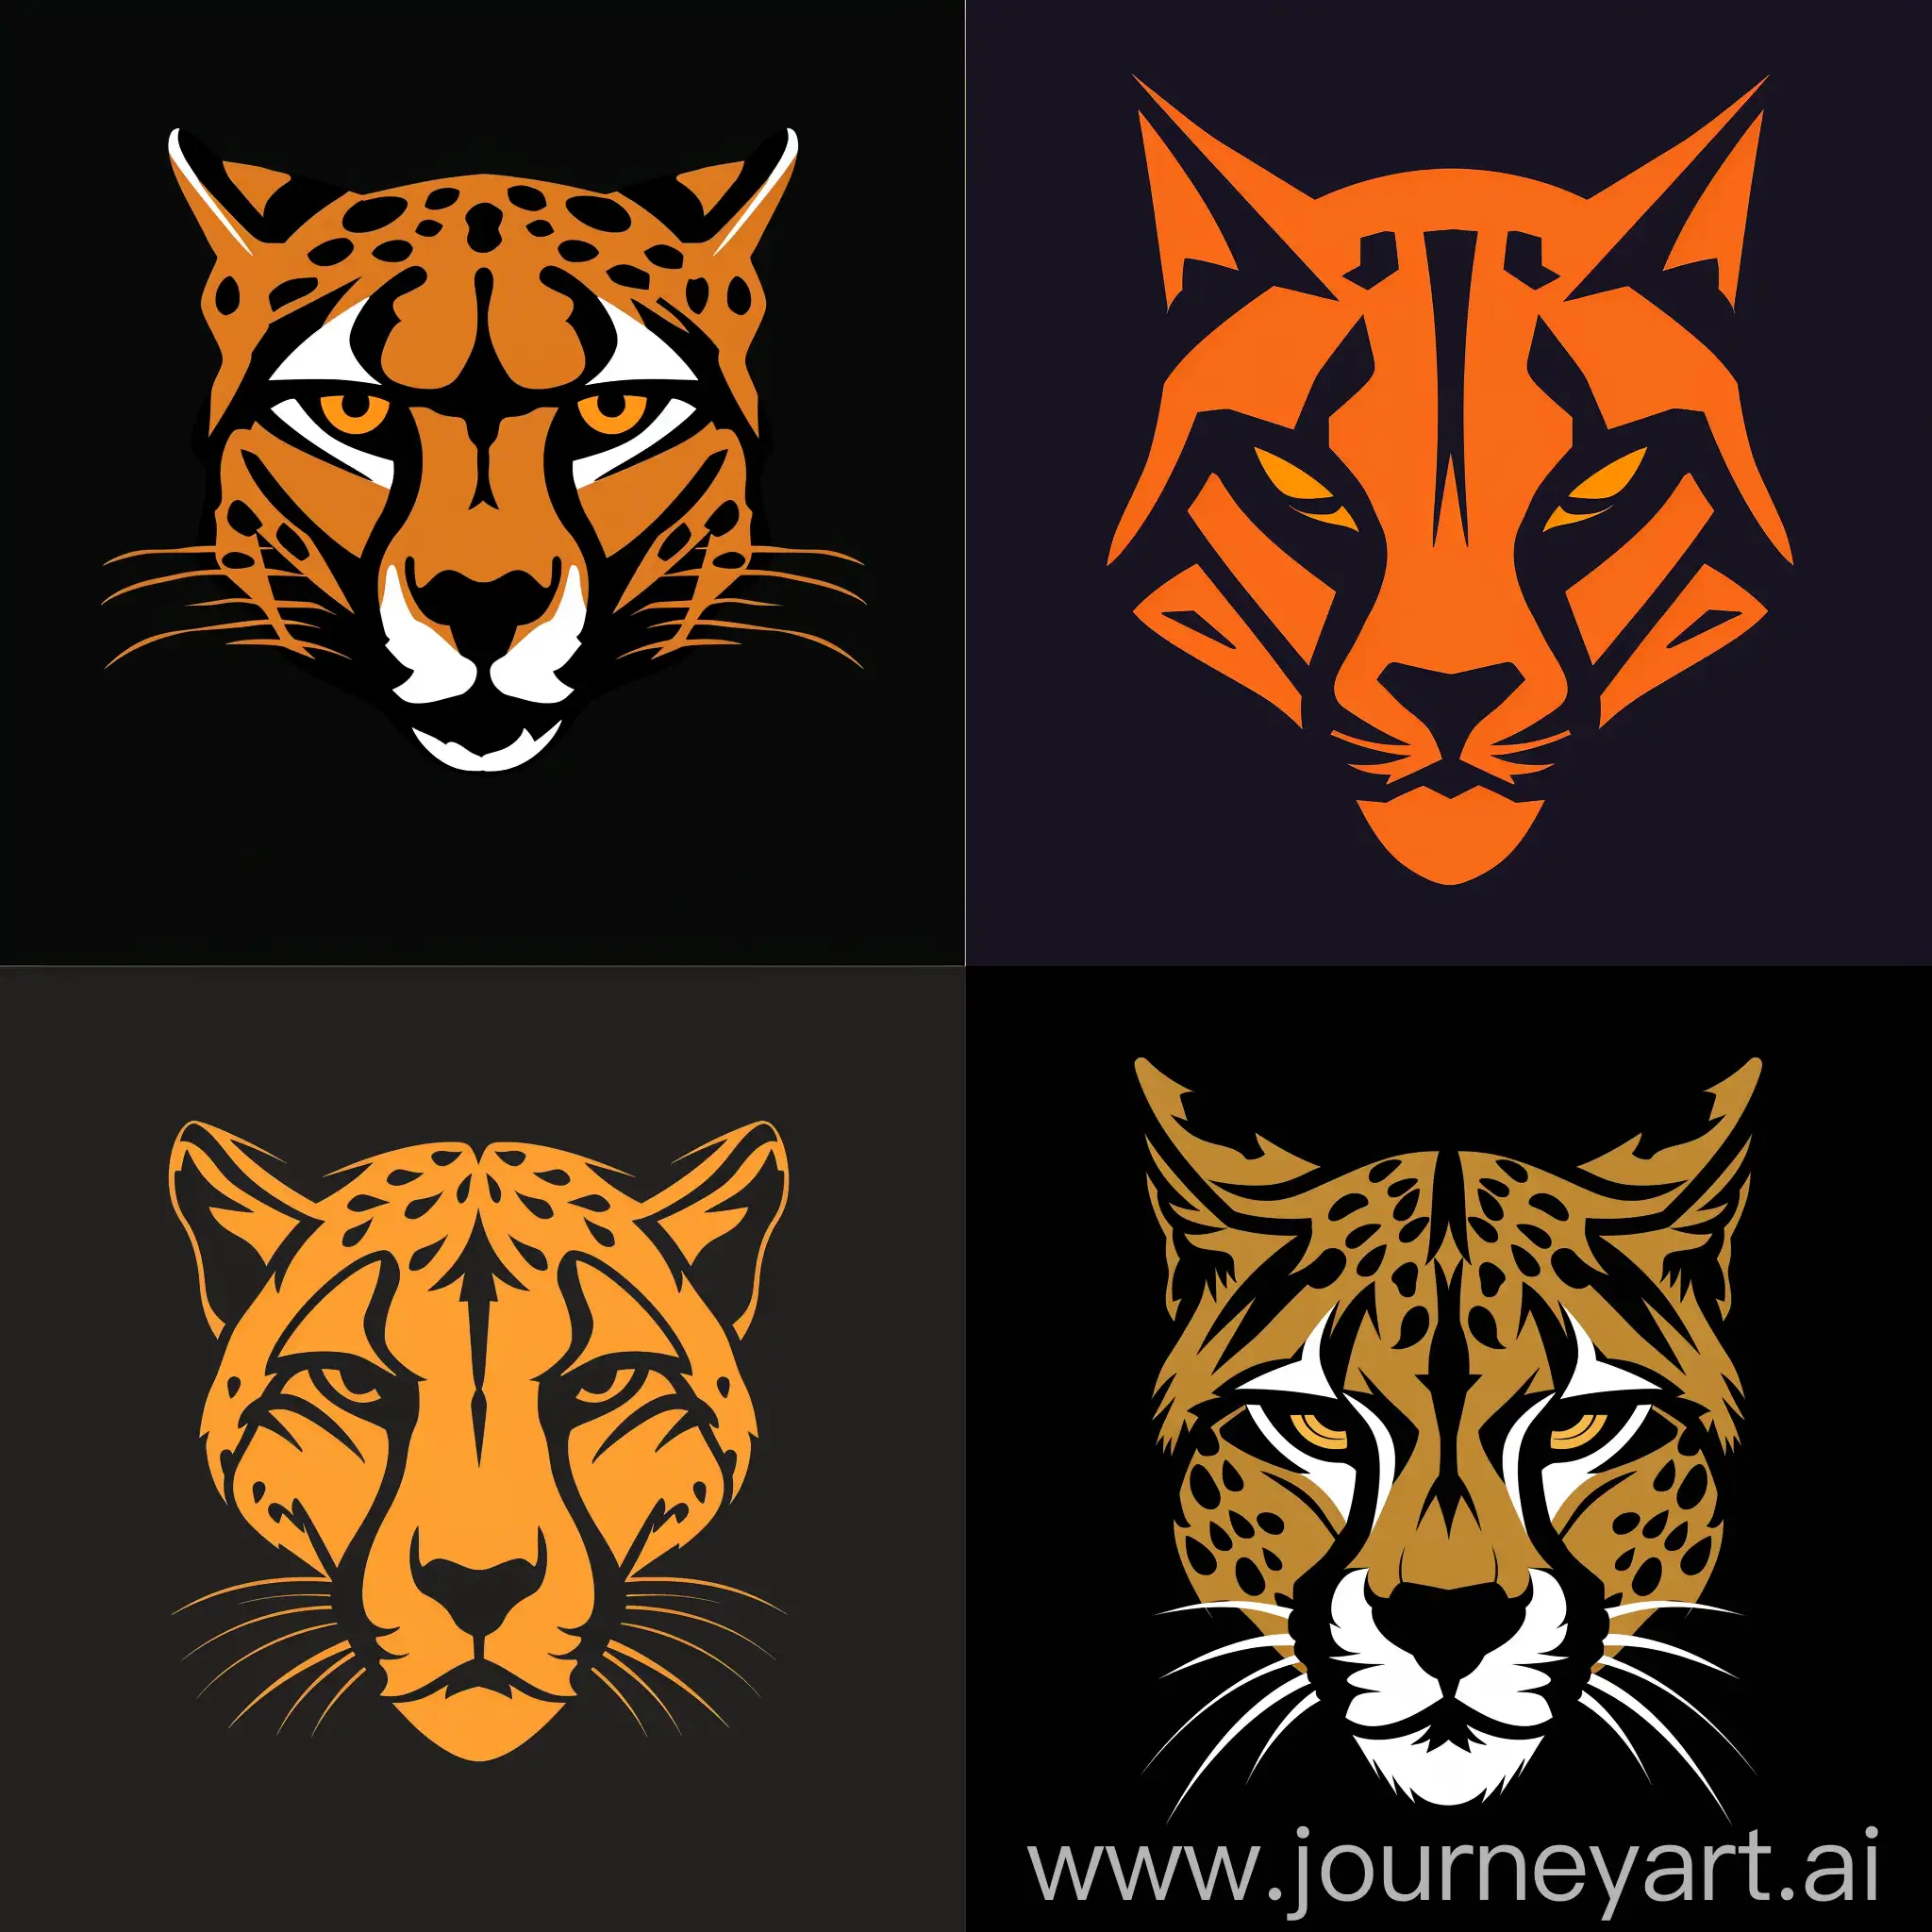 Lynx or cheetah logo ideas like puma